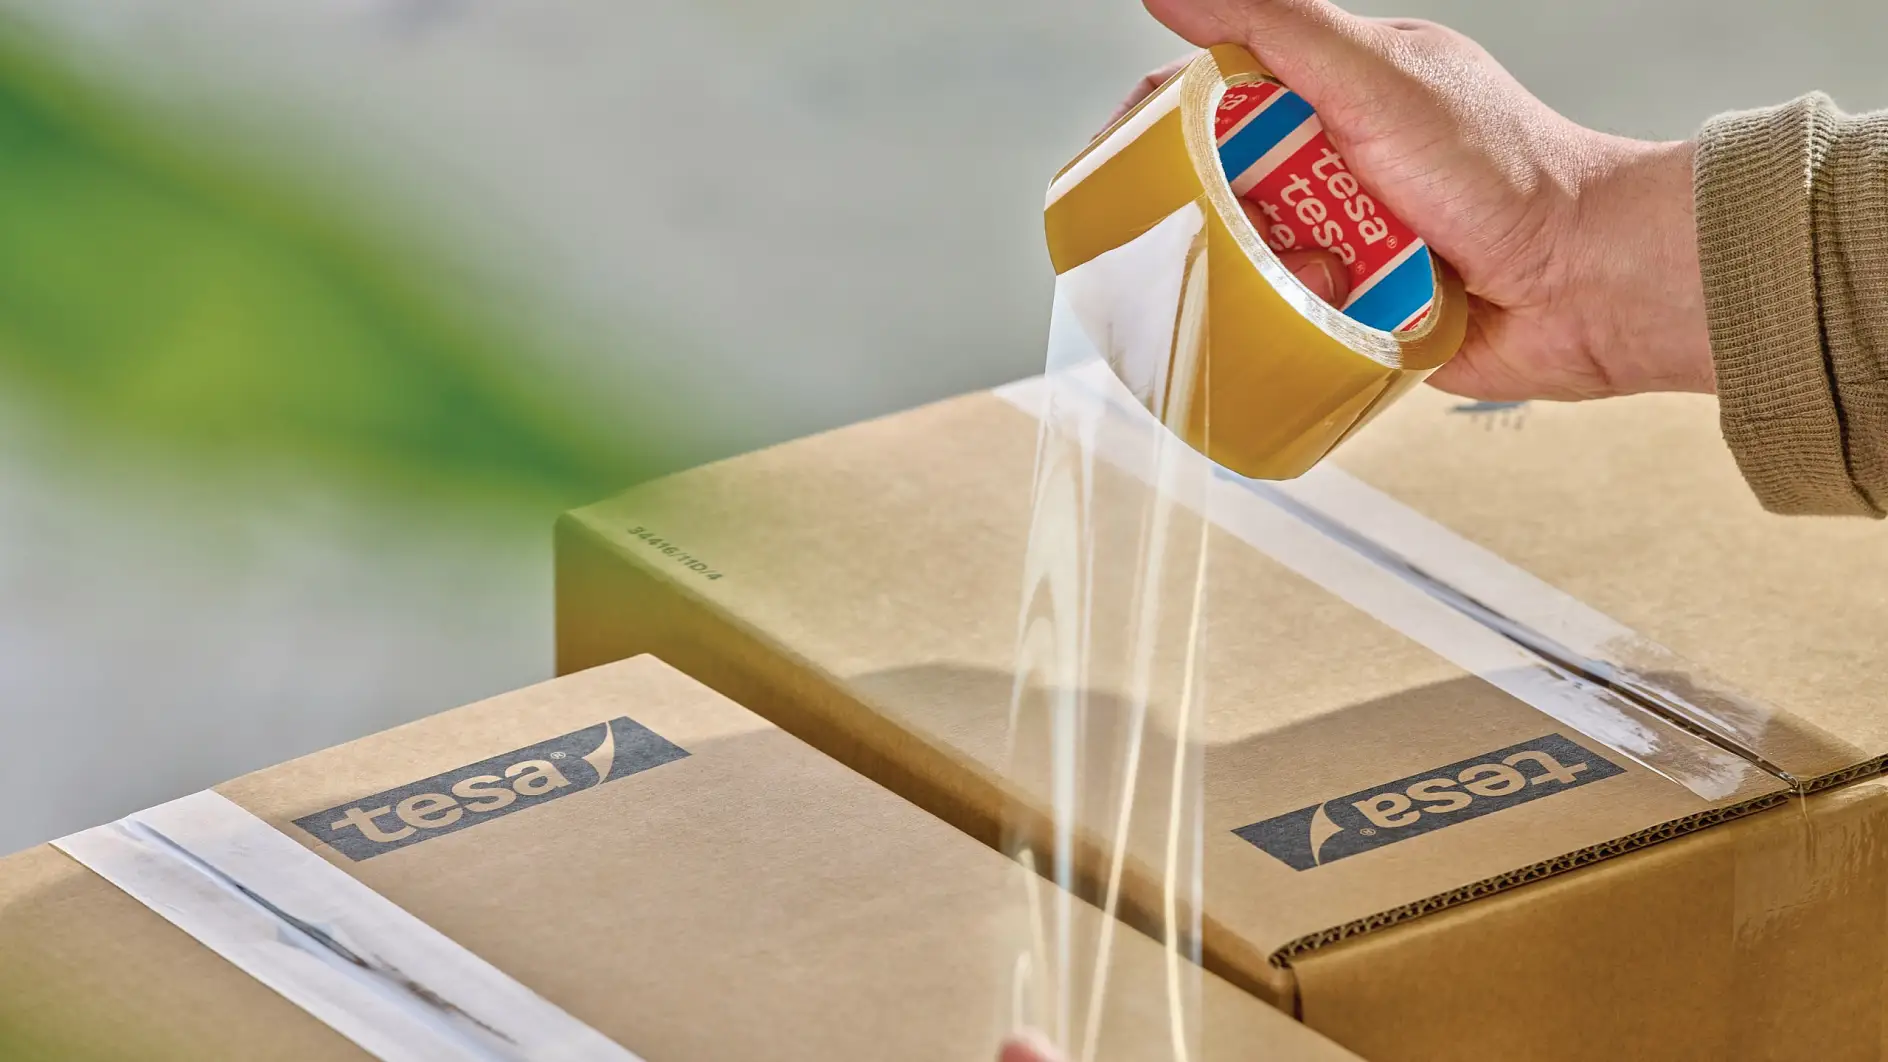 tesa-60400-bio-based-packaging-tape-005-ap